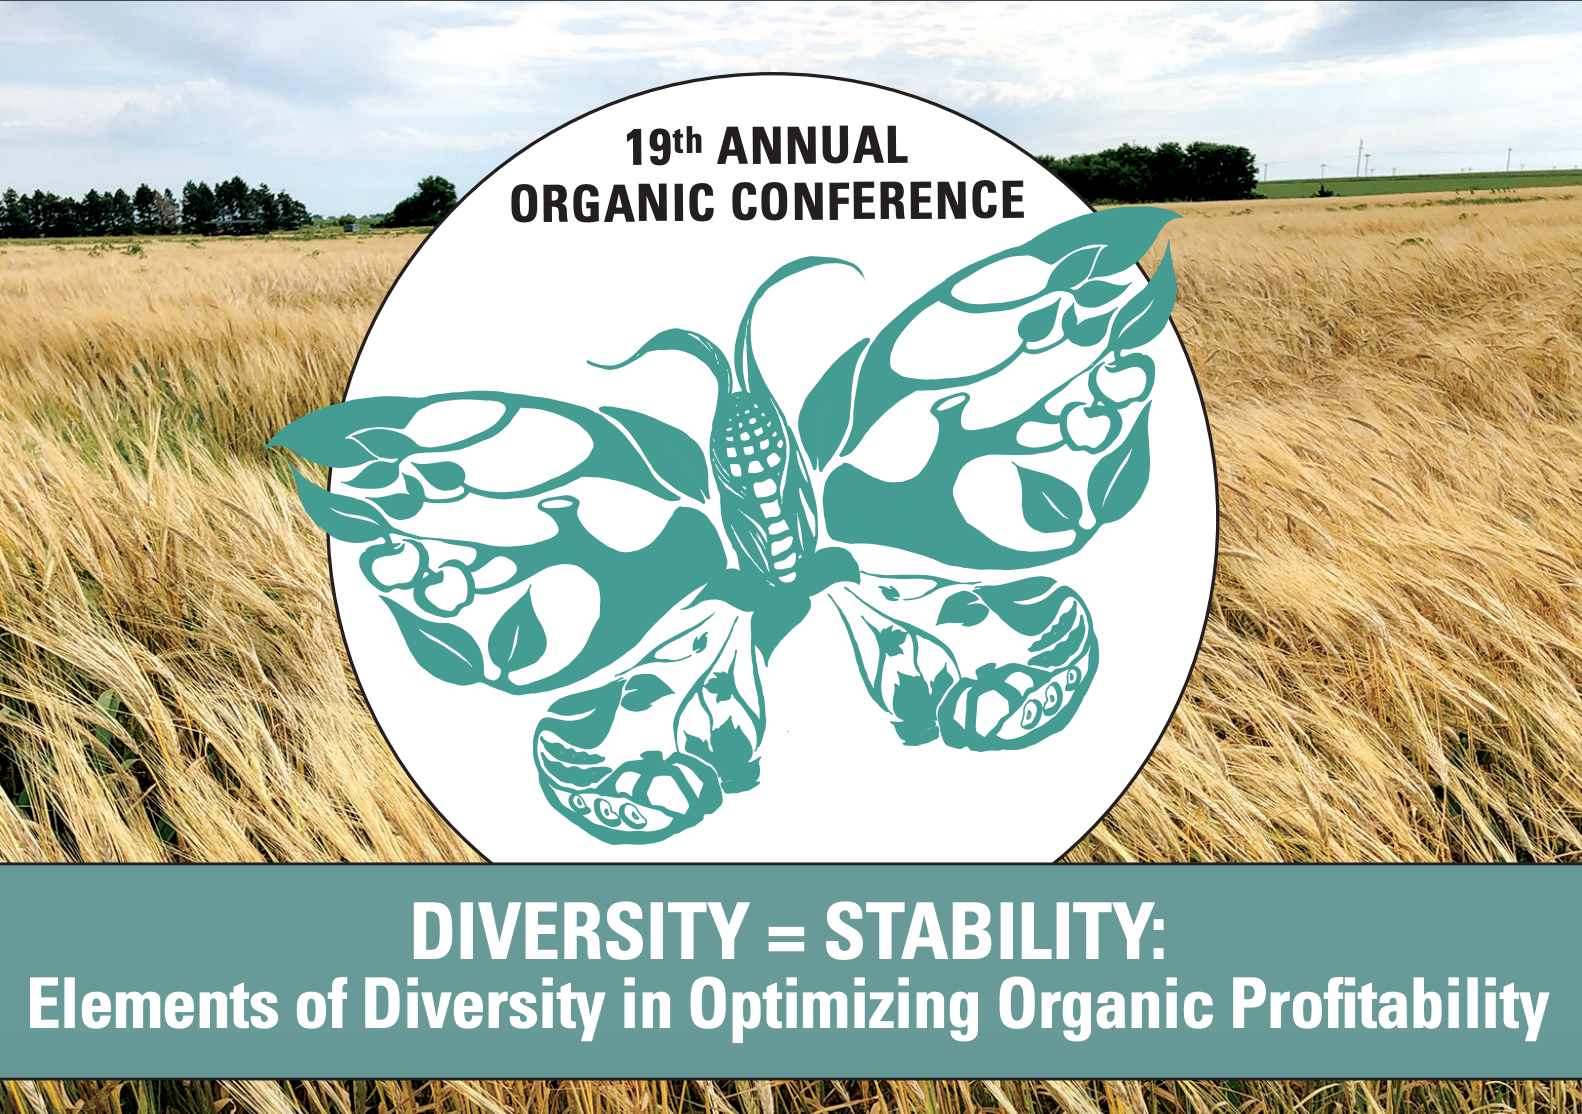 Iowa Organic Conference